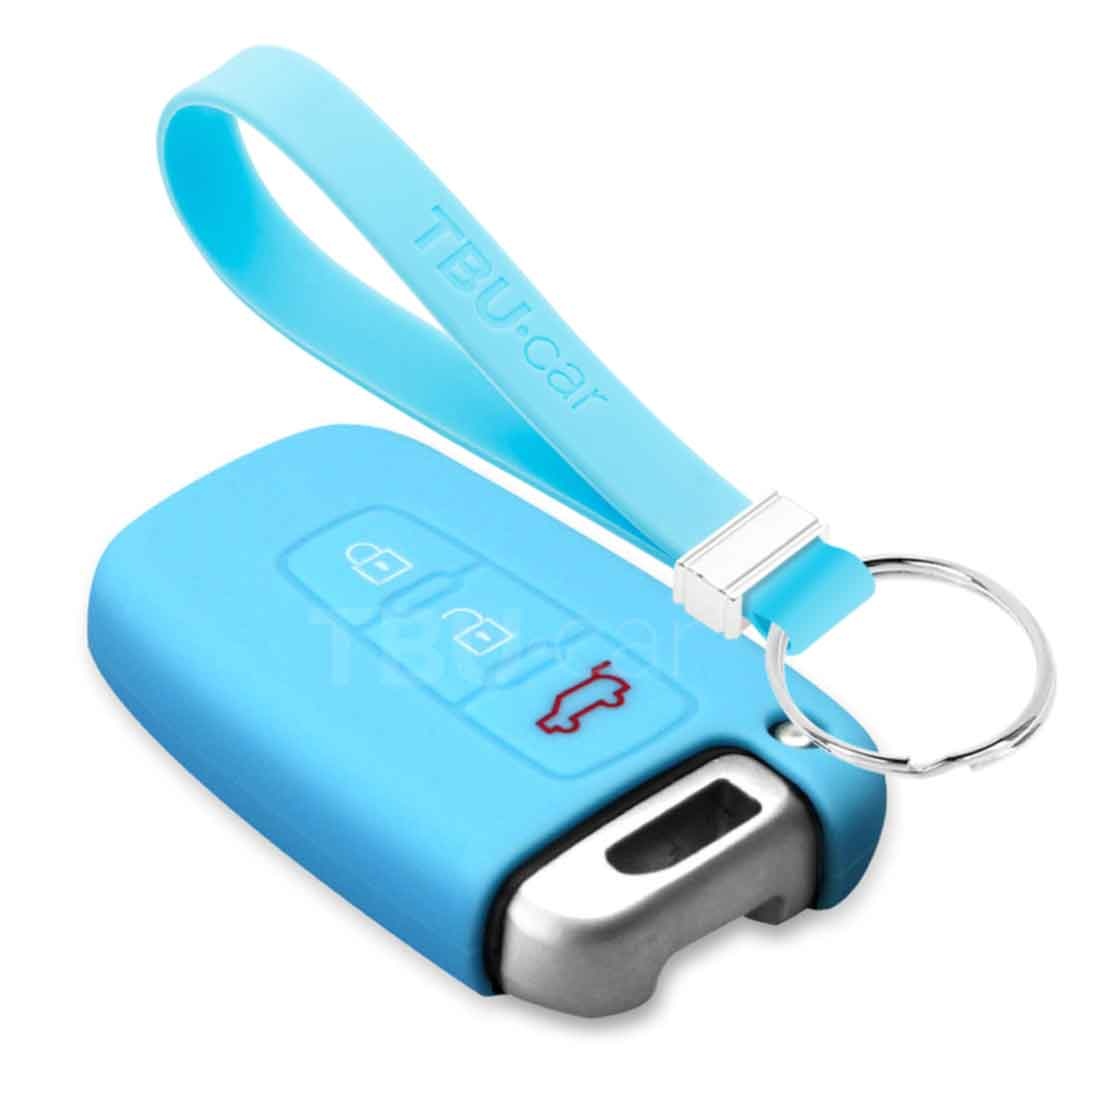 TBU car TBU car Autoschlüssel Hülle kompatibel mit Kia 3 Tasten (Keyless Entry) - Schutzhülle aus Silikon - Auto Schlüsselhülle Cover in Hellblau